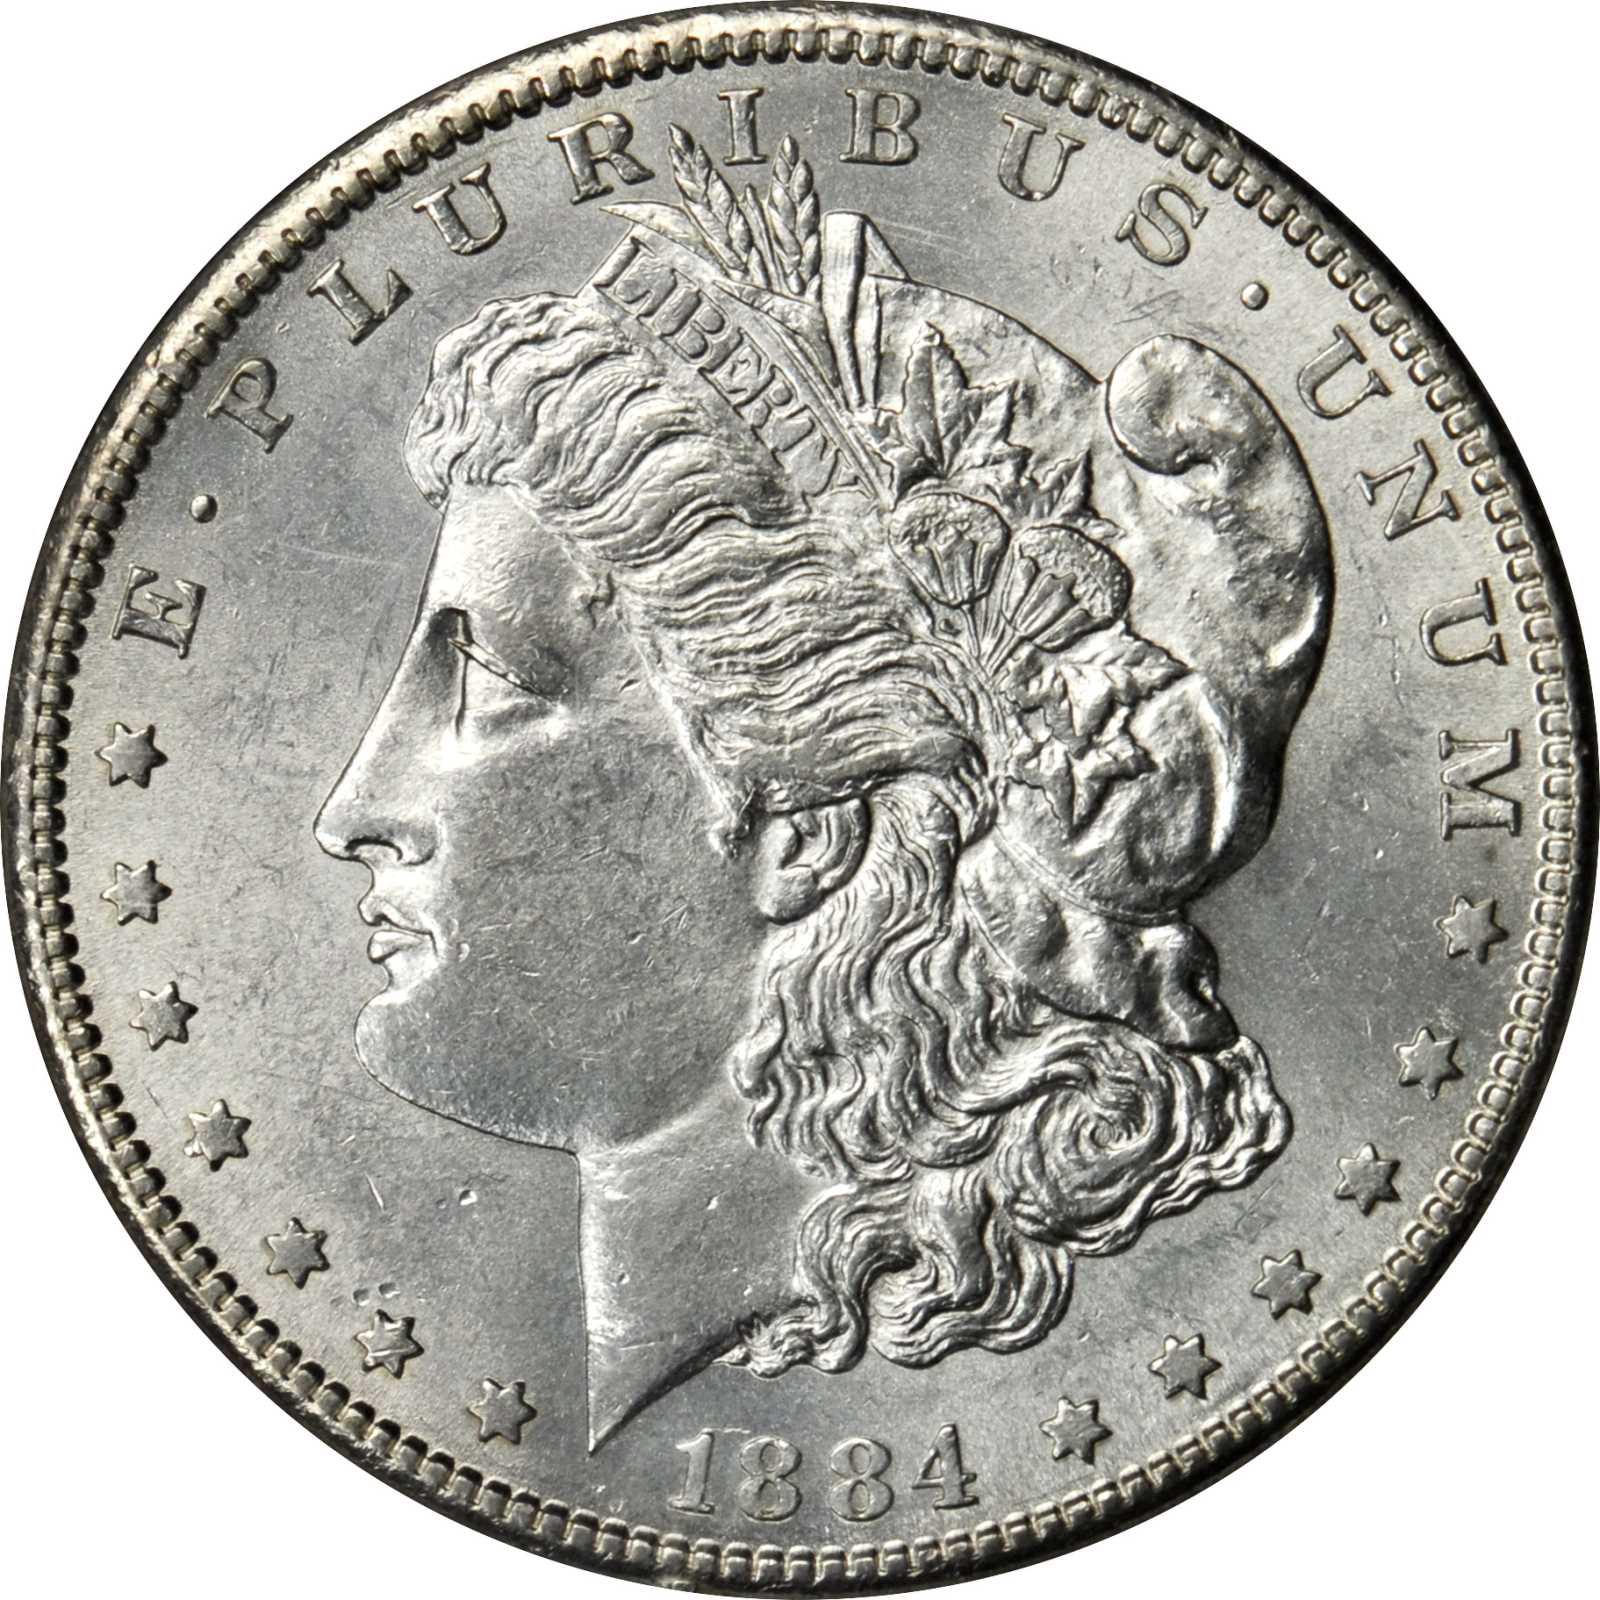 S Morgan Silver Dollar Value | CoinTrackers